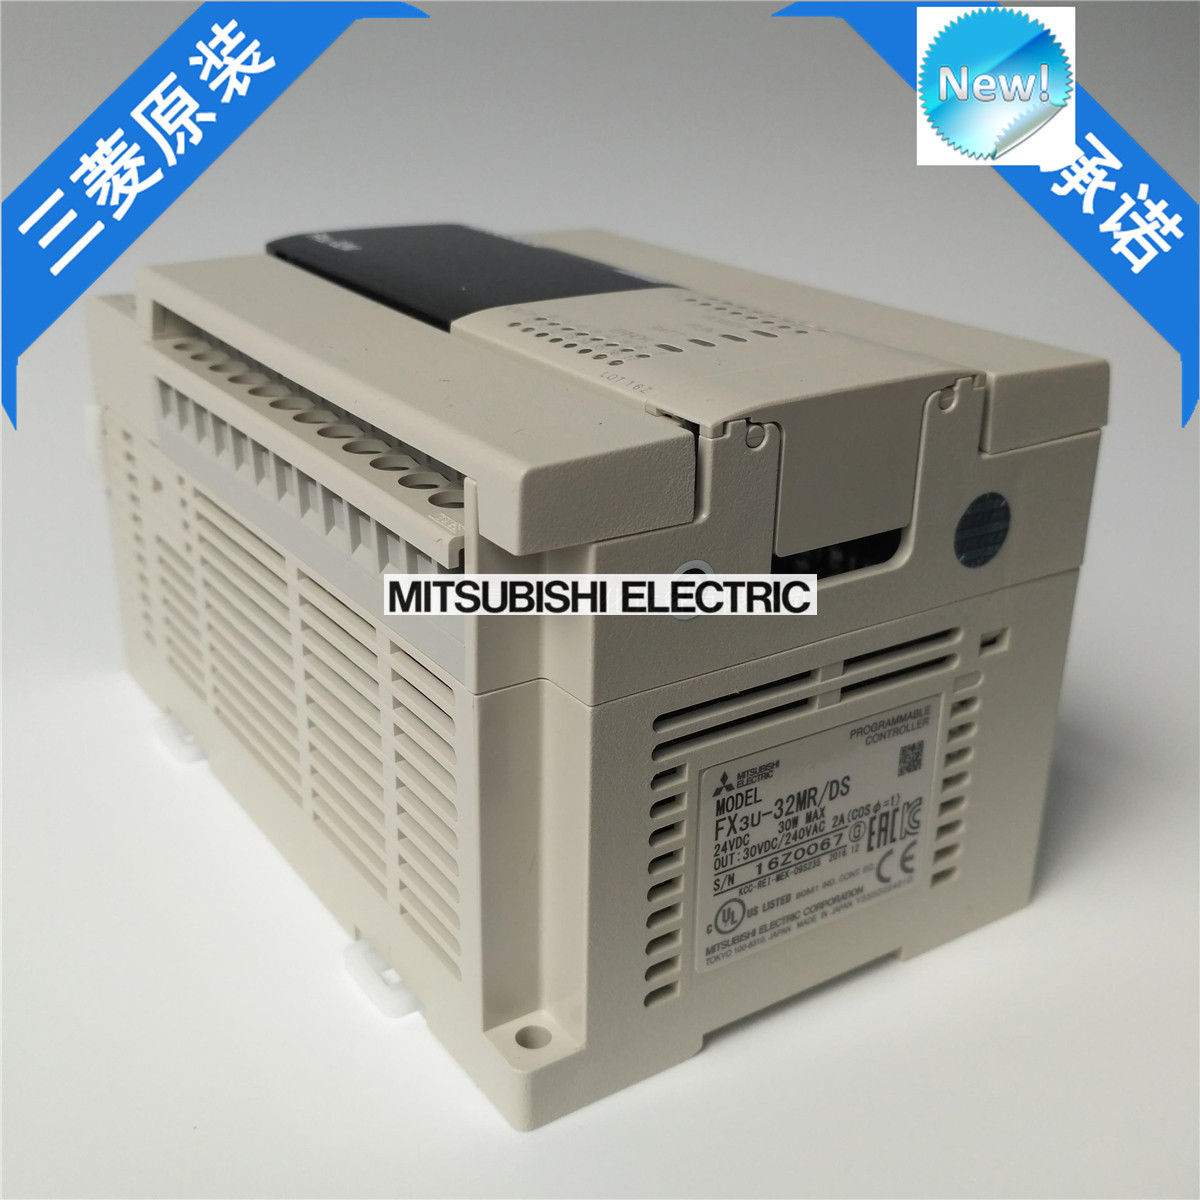 Brand New Mitsubishi PLC FX3U-32MR/DS In Box FX3U32MRDS - Click Image to Close